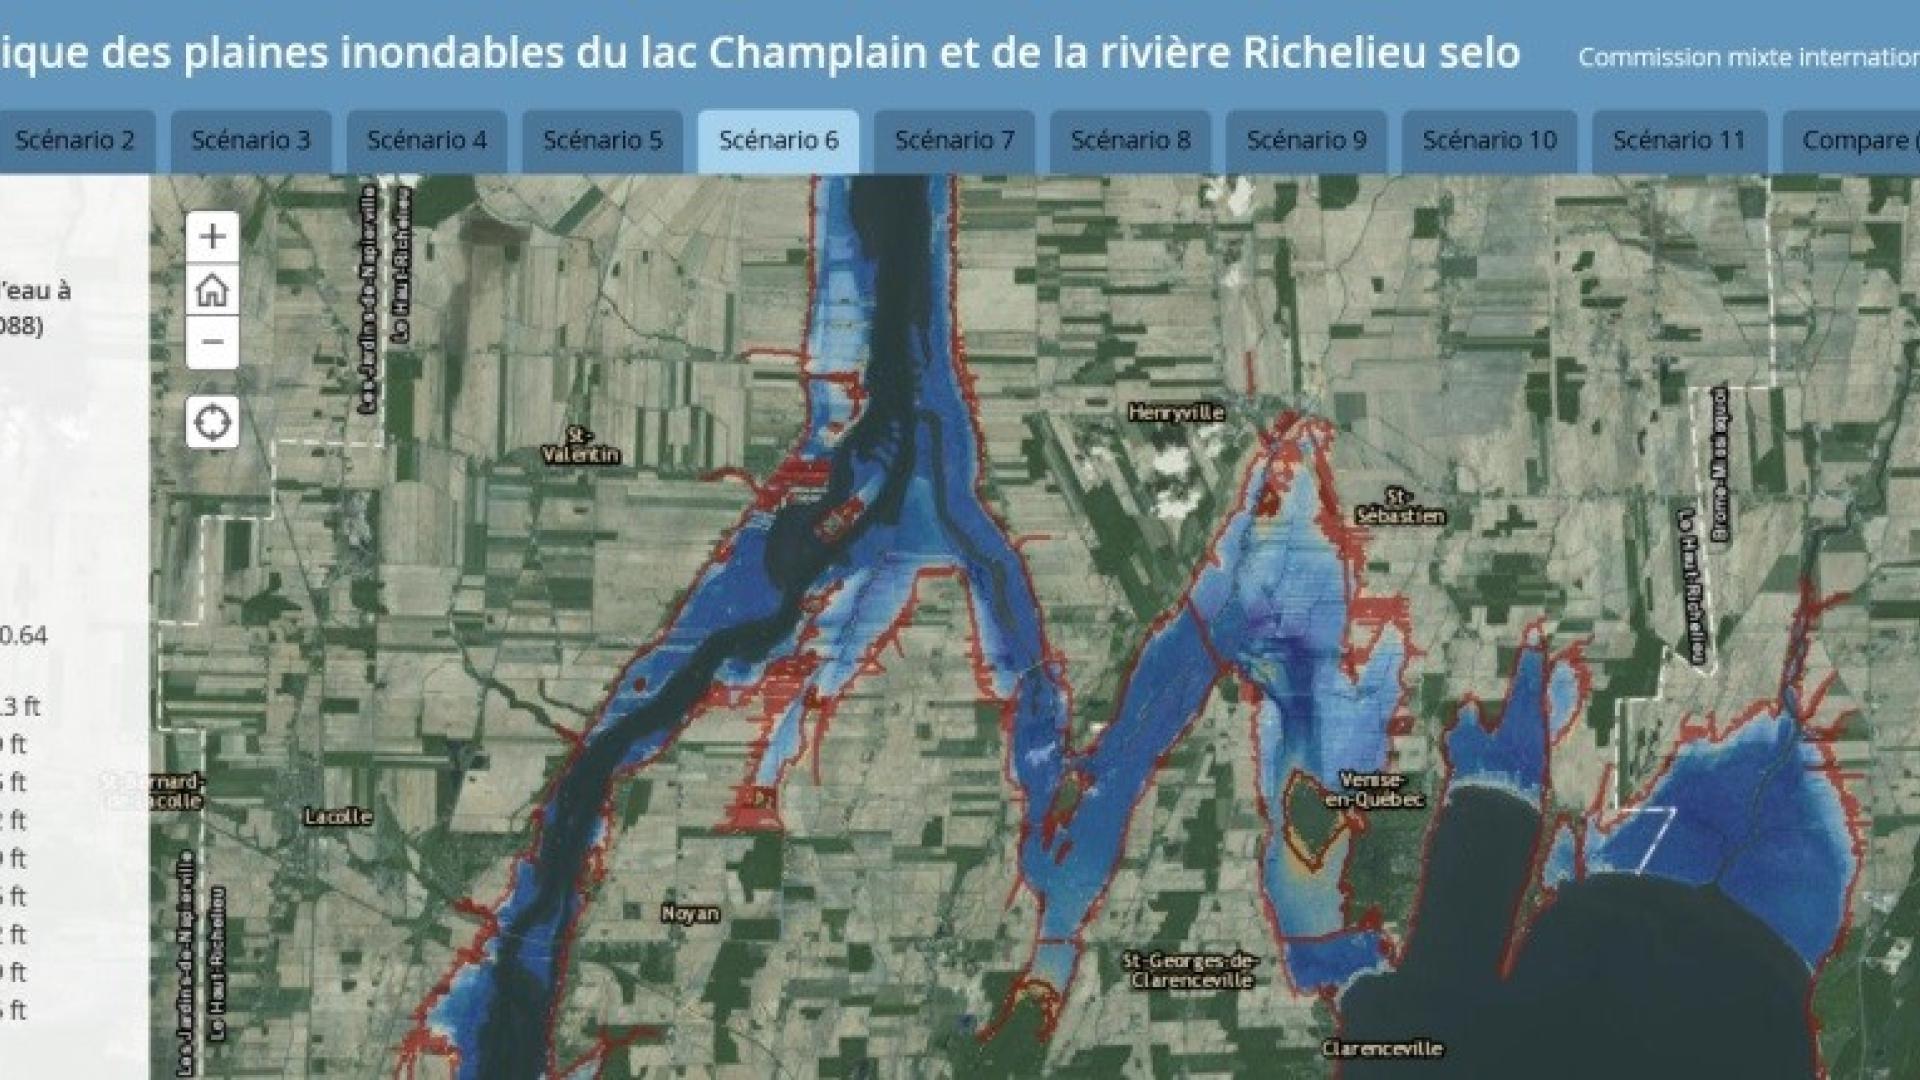 Water Matters - Static Map of Lake Champlain-Richelieu River flood plains